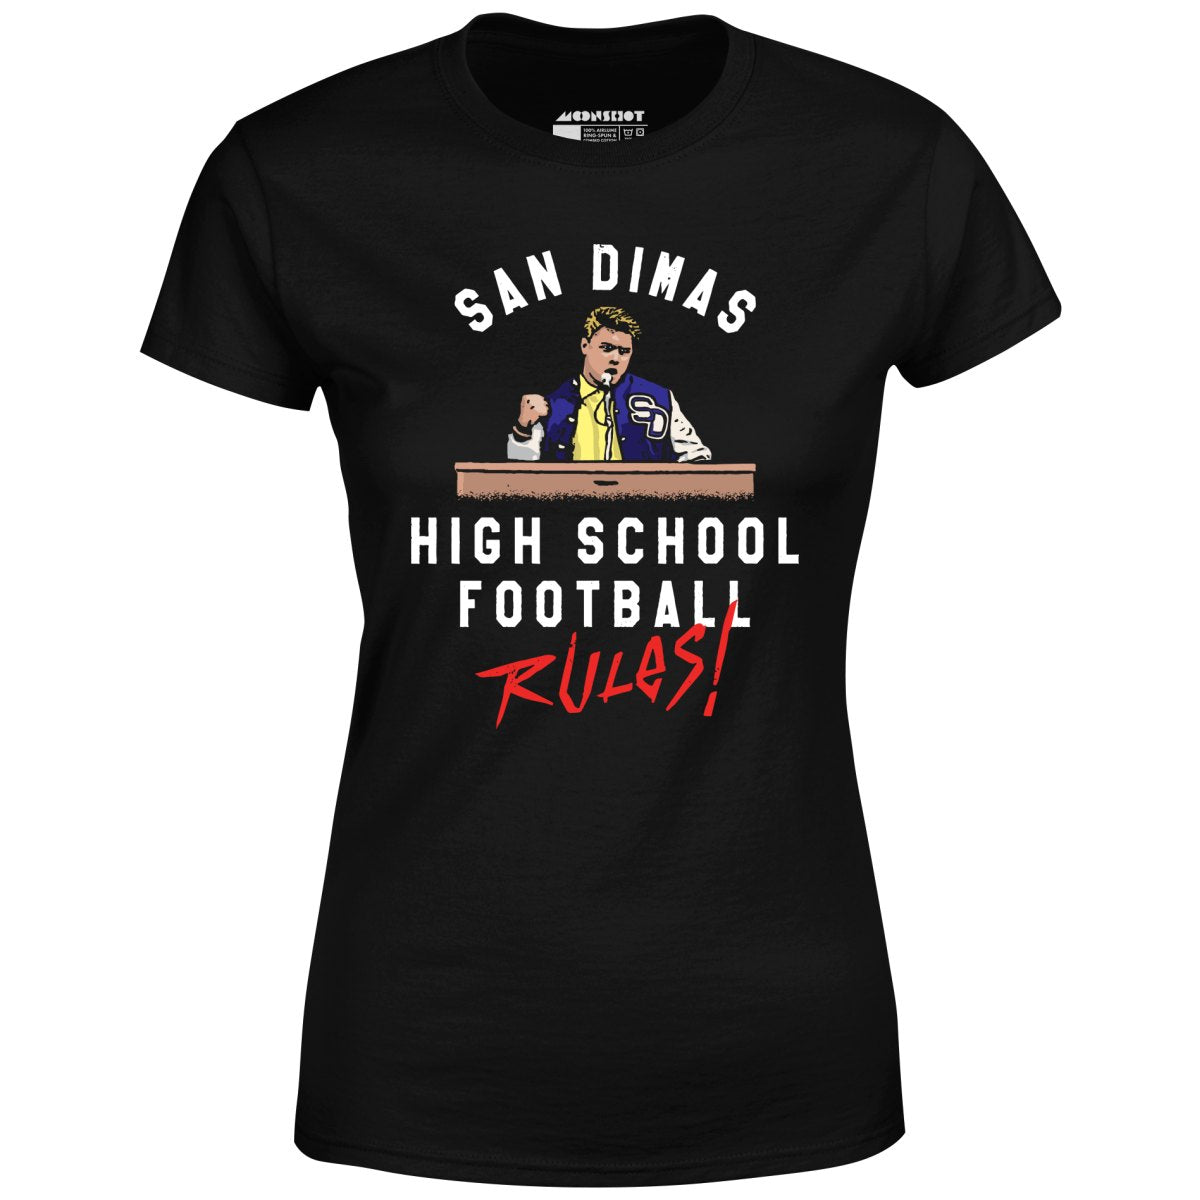 San Dimas High School Football Rules - Women's T-Shirt